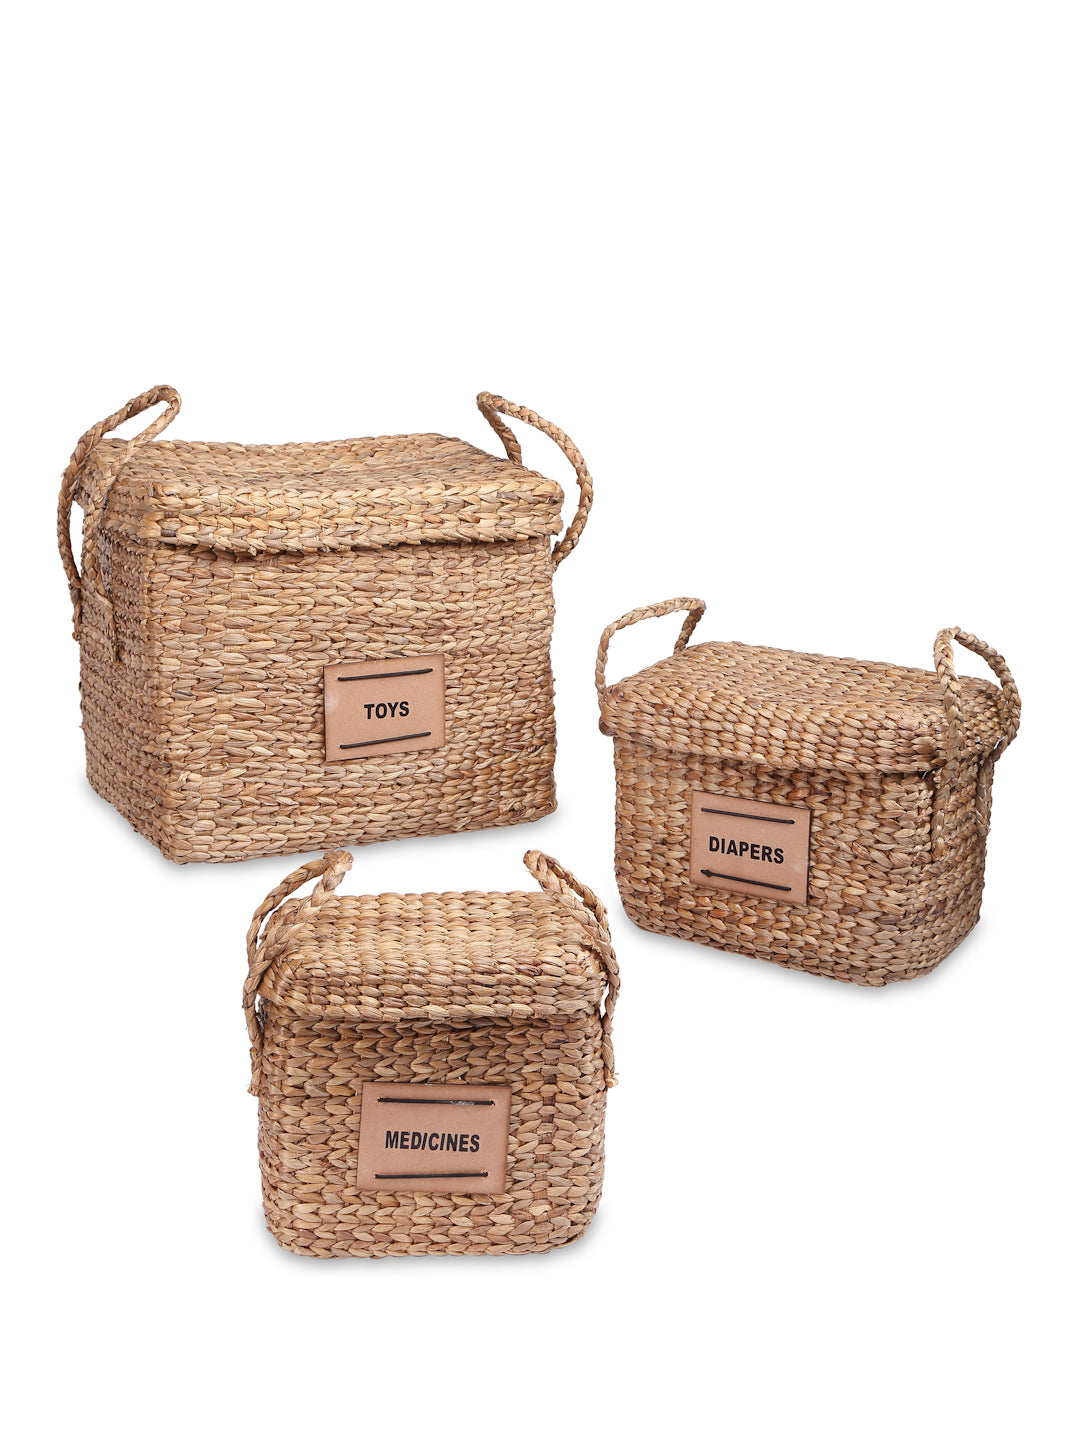 Bamboo Cane Basket Set Of 3 - DIAPER, MEDICINE & TOY